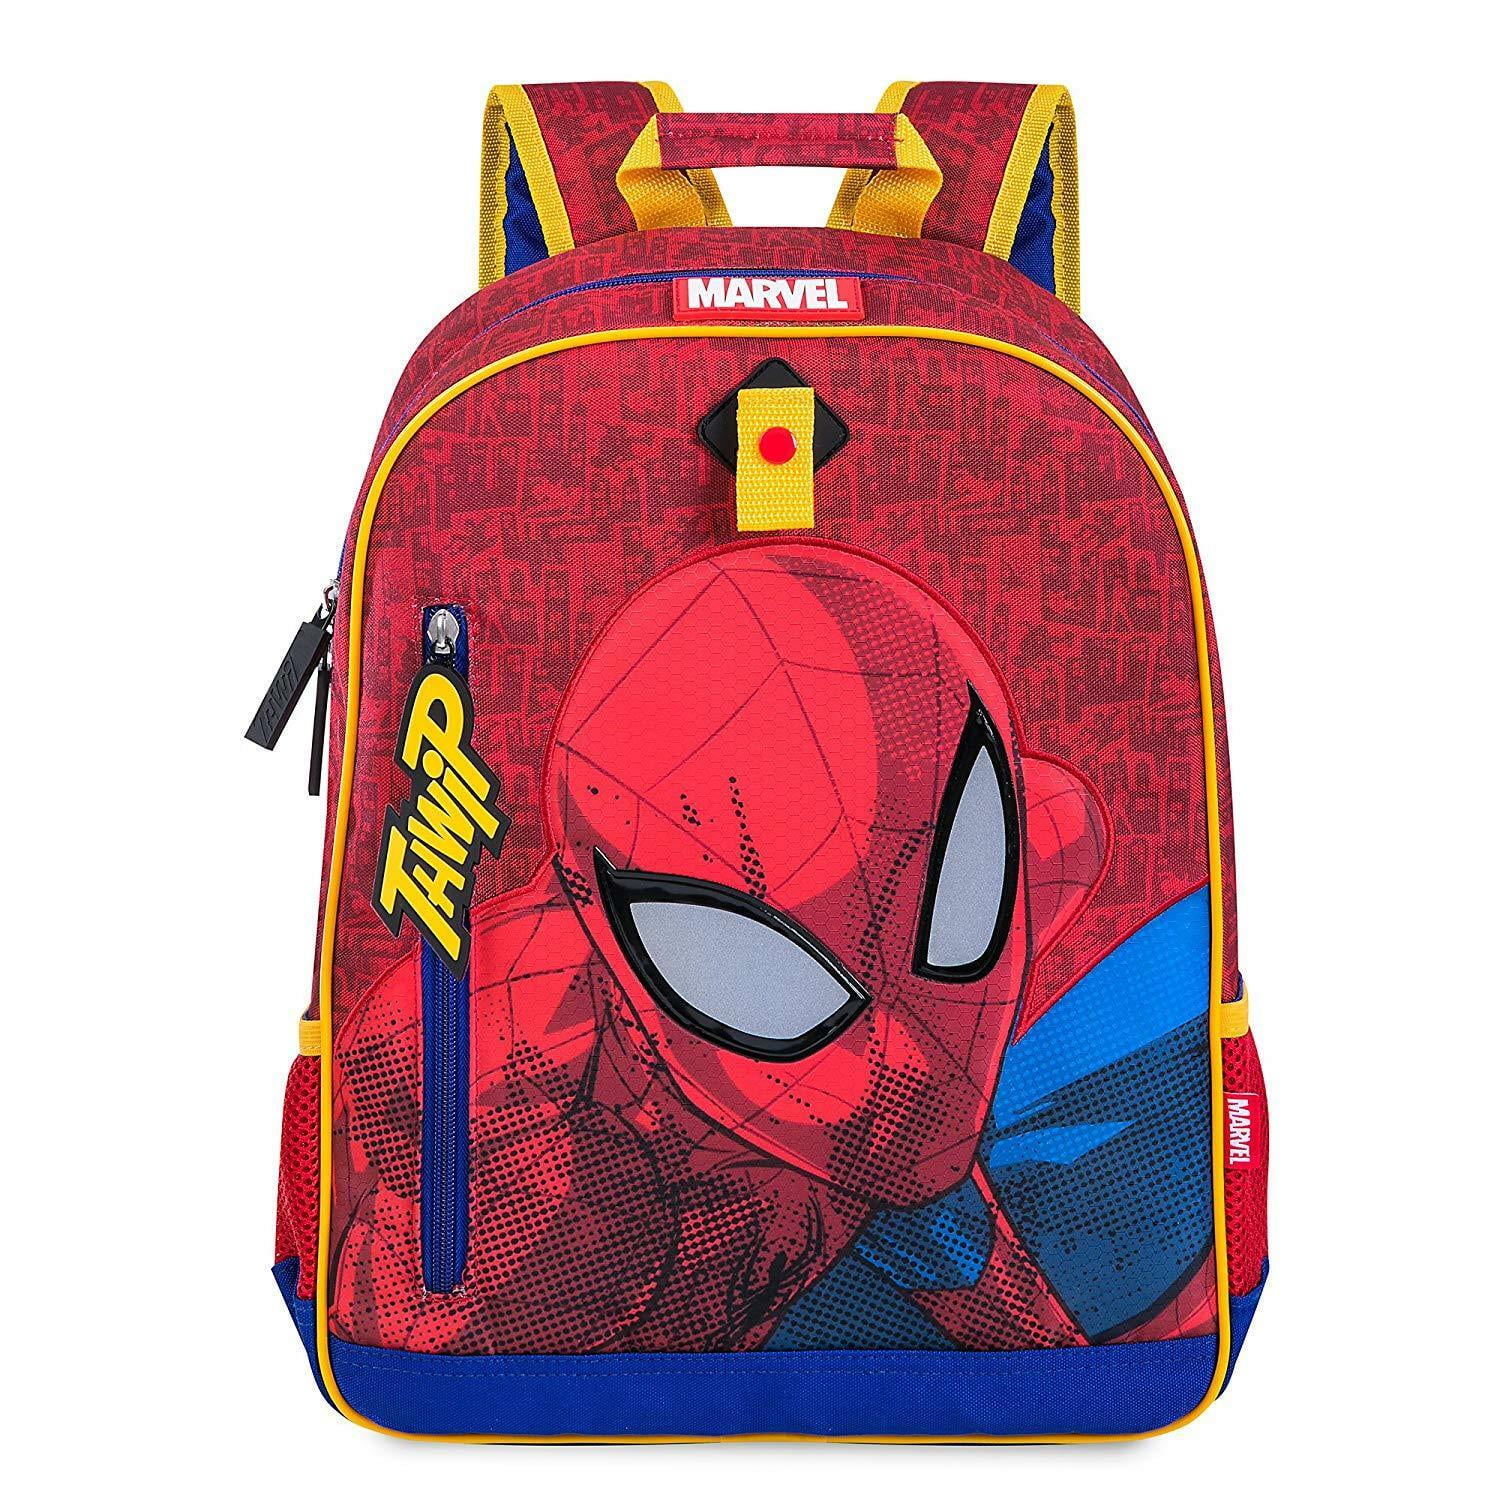 Disney Store Marvel Spider-Man School Backpack